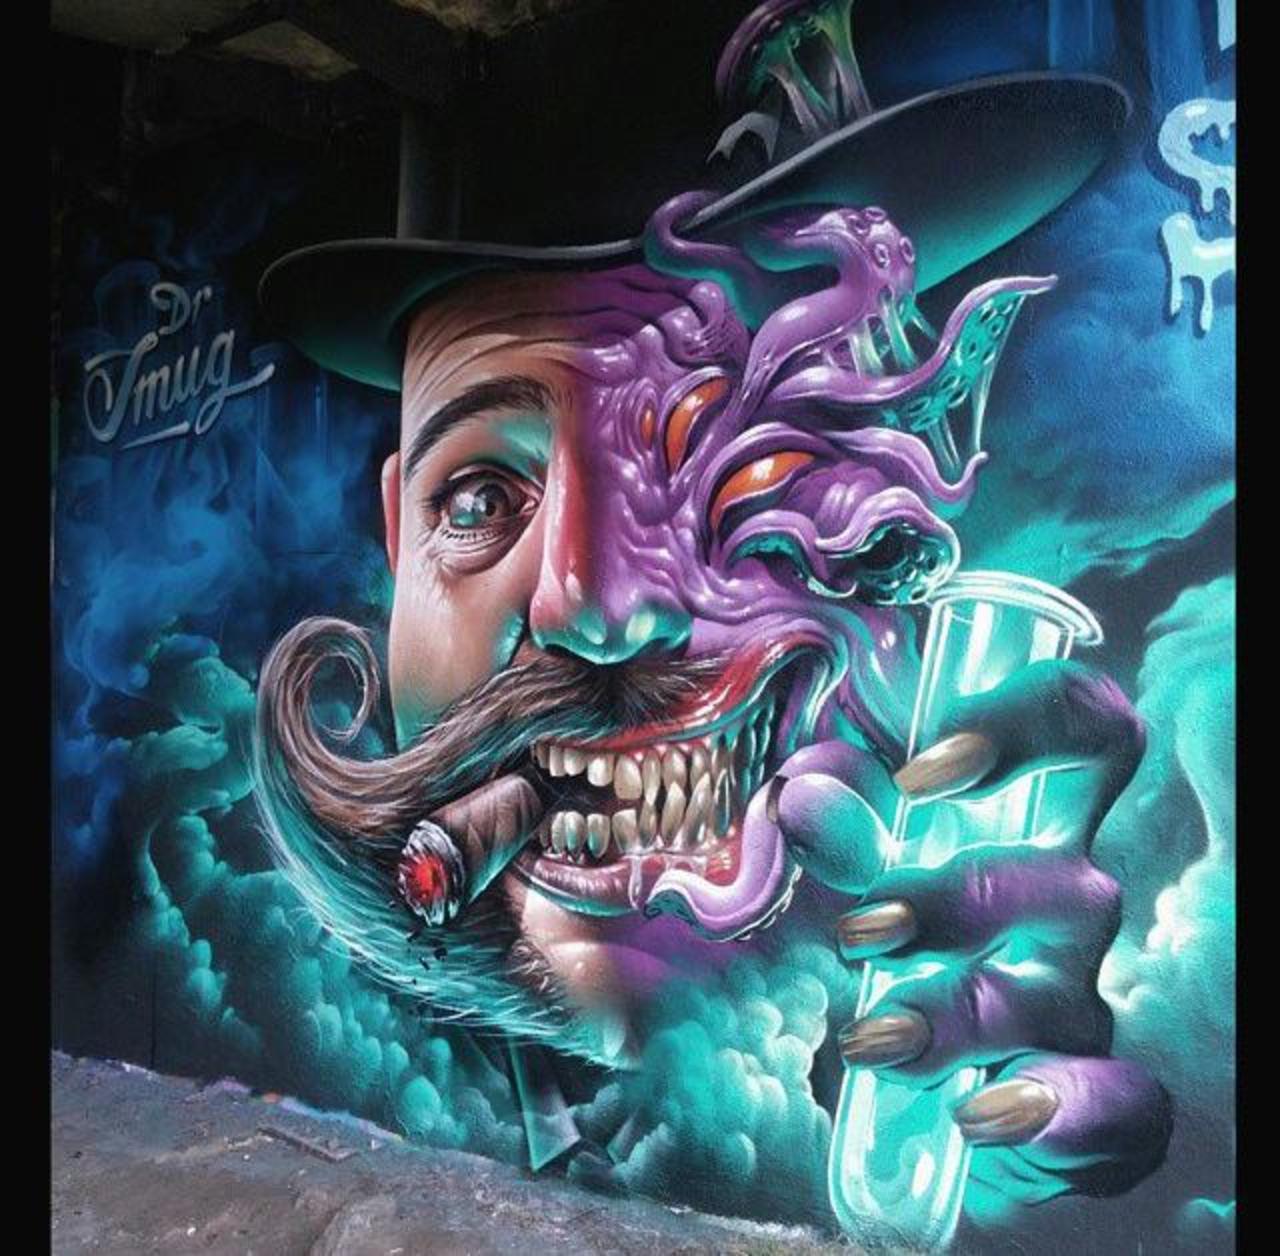 New Street Art piece by Smug & Saturno in Glasgow 

#art #arte #graffiti #streetart http://t.co/oHpFLQHXuC yo